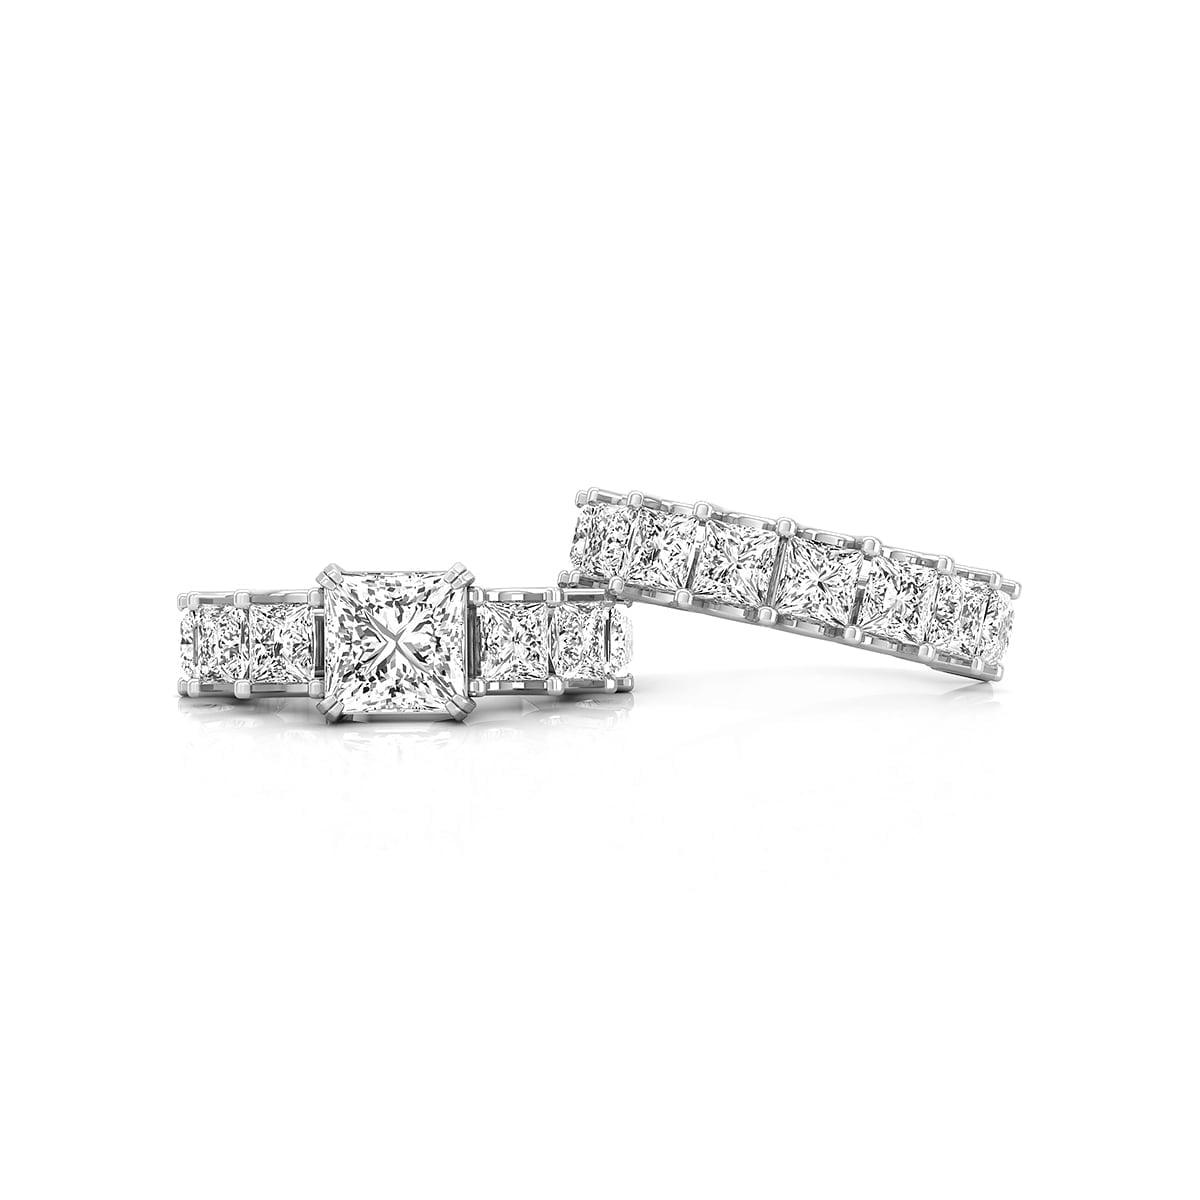 Sparkling White Princess Cut CZ Stone Stackable Wedding Bridal Ring Set